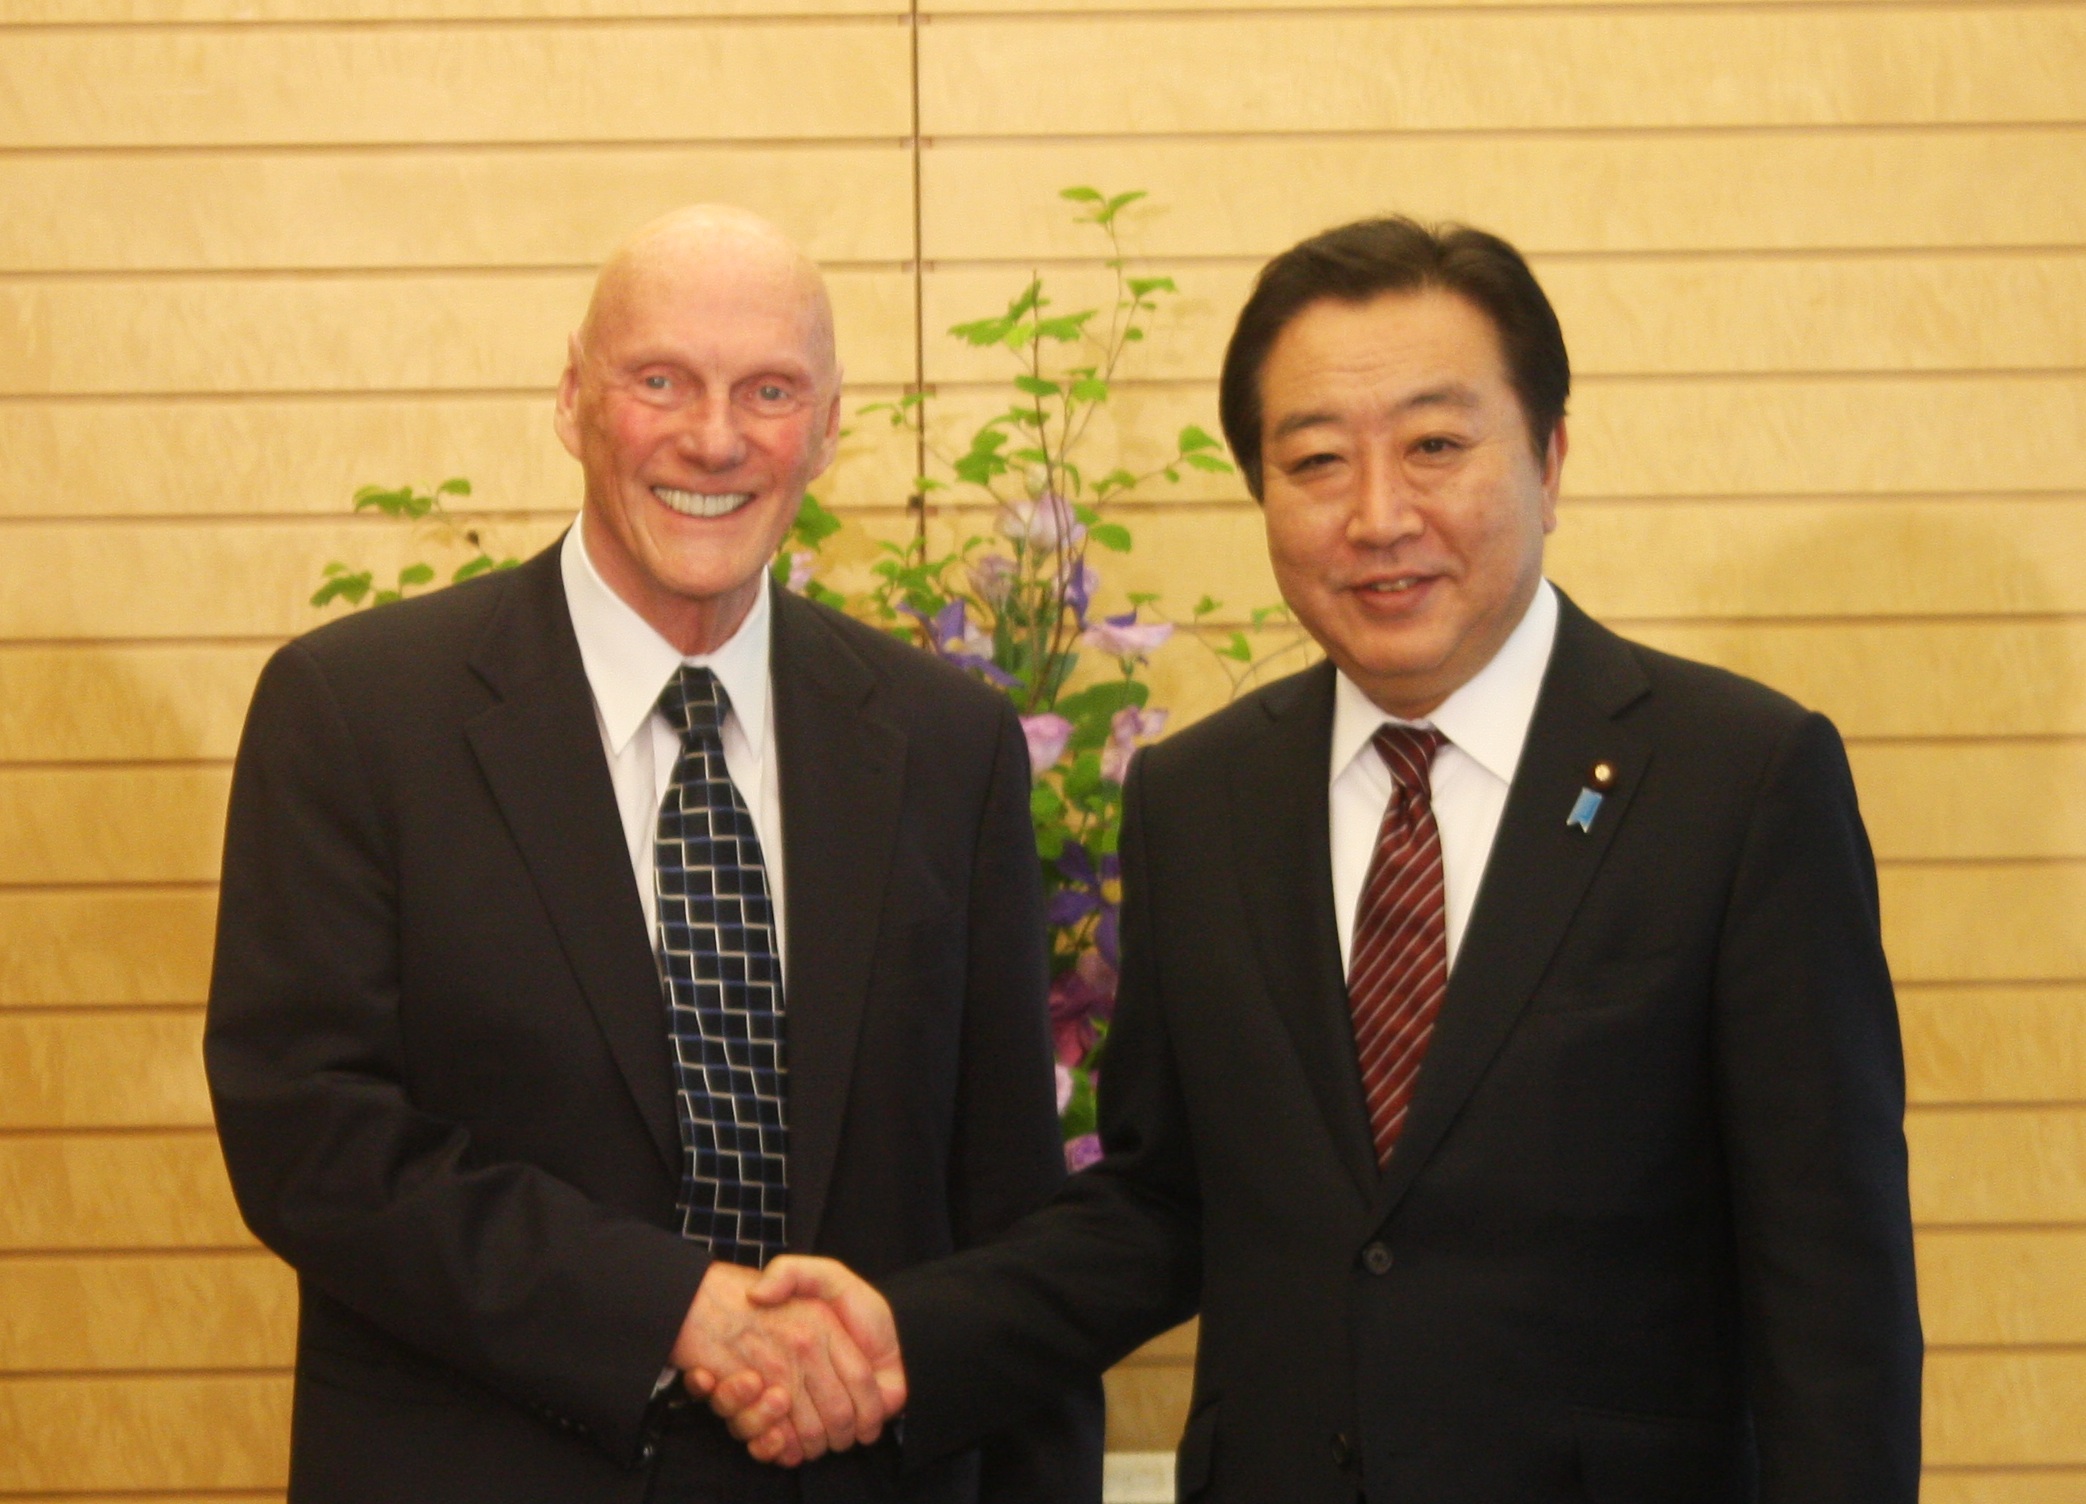 Mr. Fred Kavli and Prime Minister Yoshihiko Noda